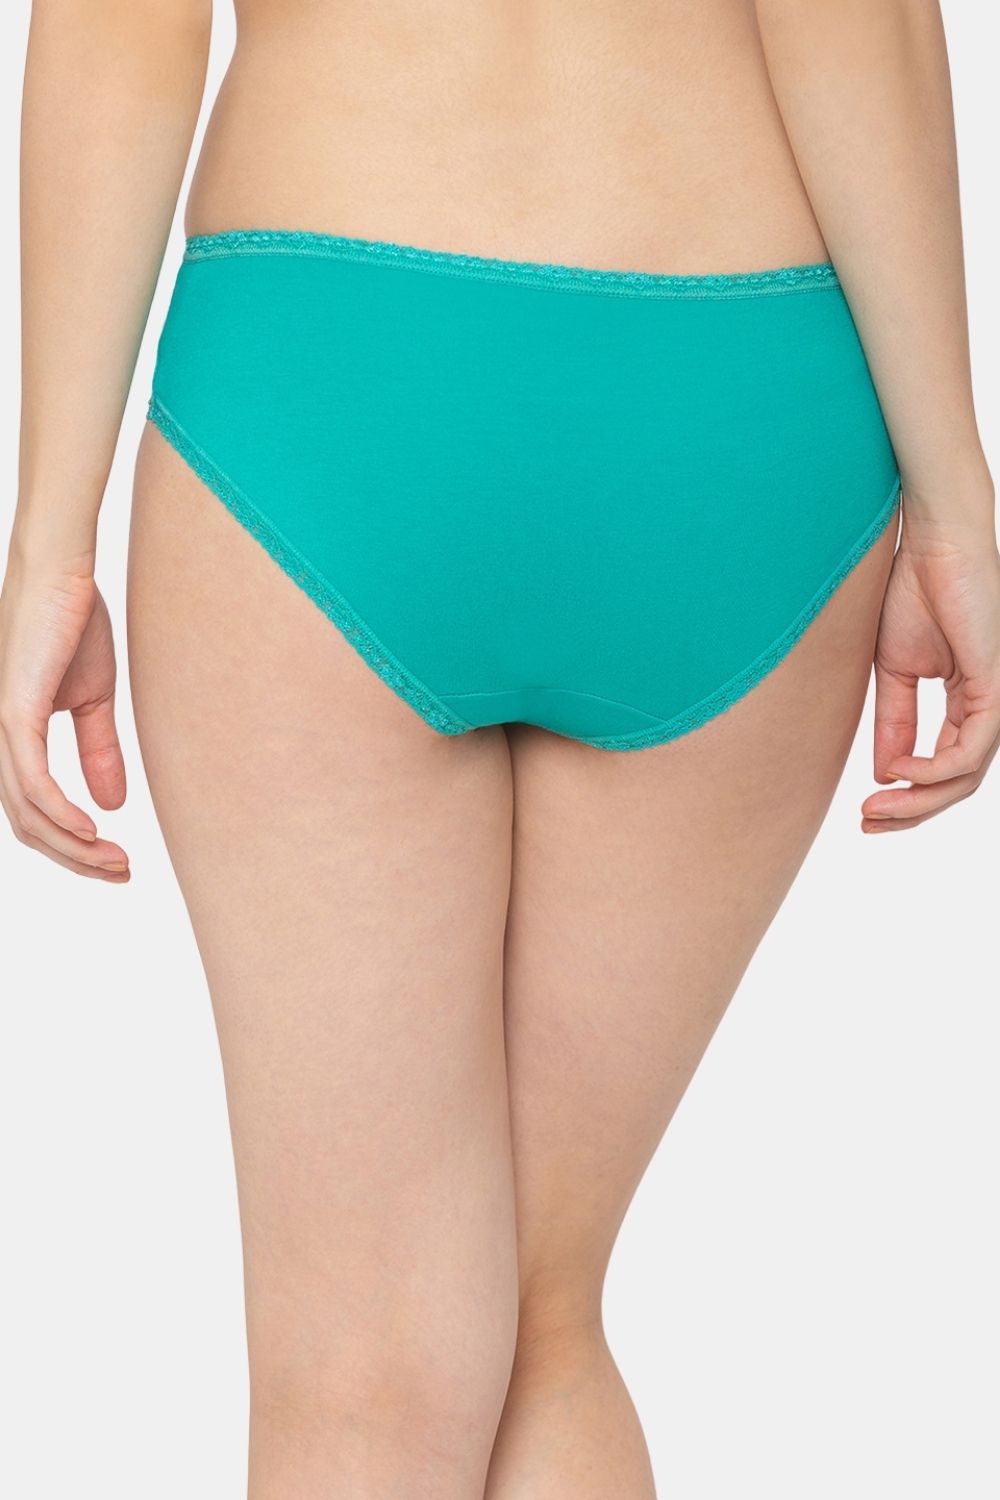 CANDYSKIN | Candyskin Womens's Cotton Lace Bikini Panty (Pack of 3) 2